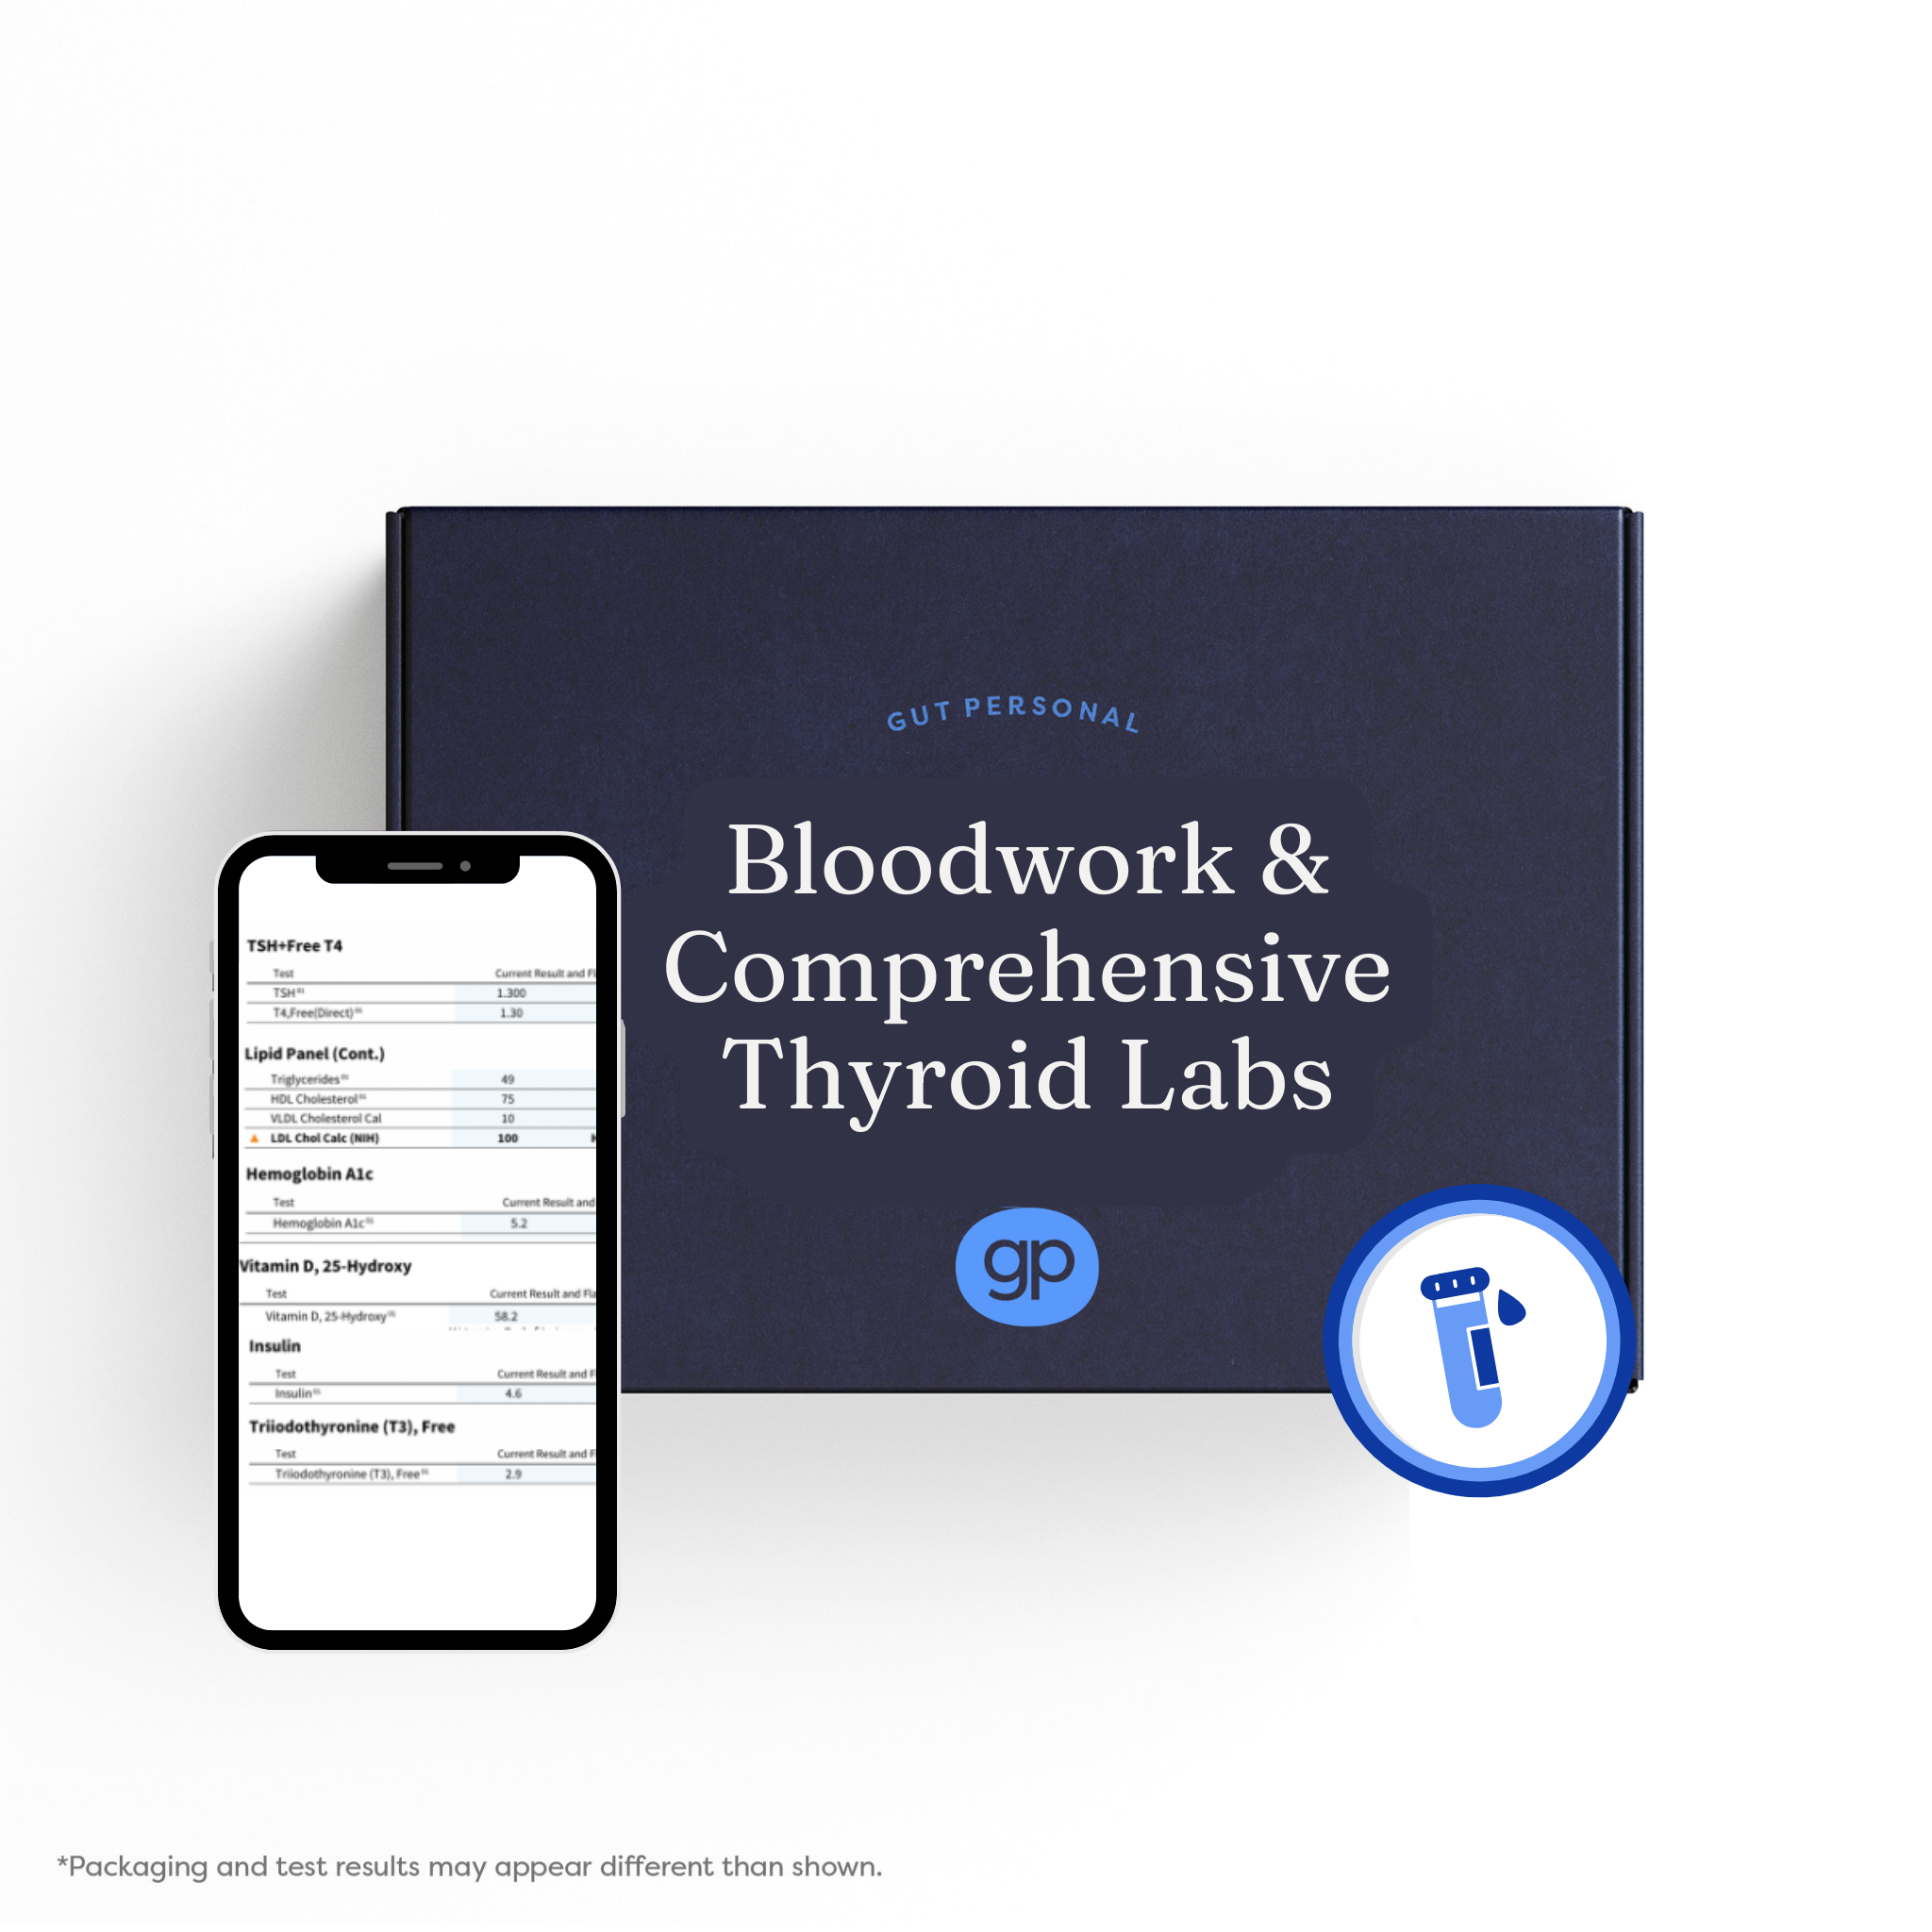 Bloodwork & Comprehensive Thyroid Labs